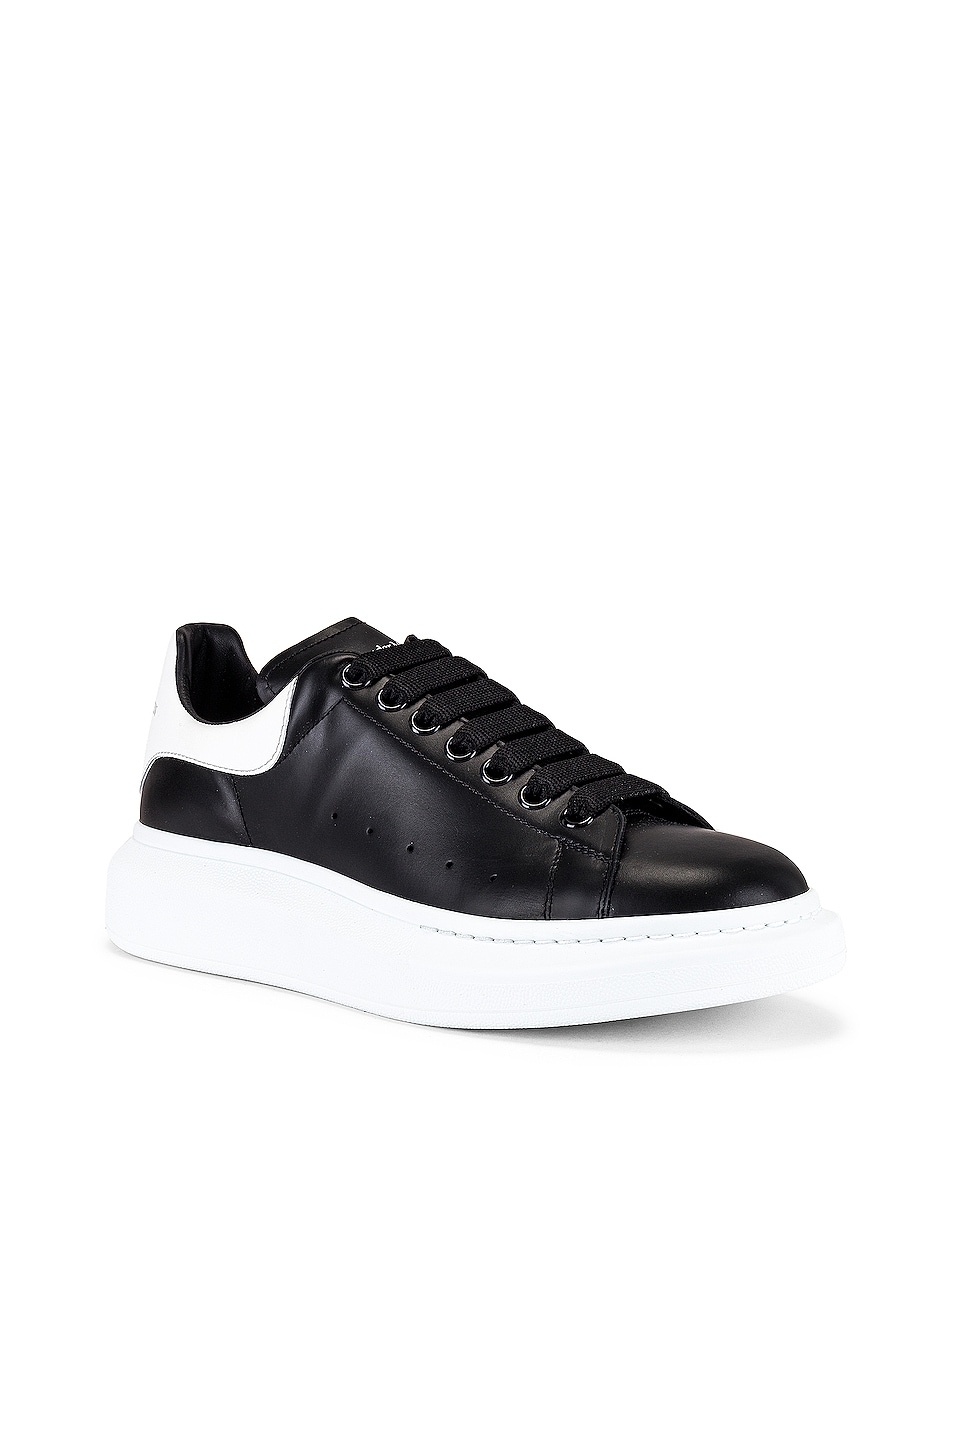 Alexander McQueen Sneaker in Black & White | FWRD